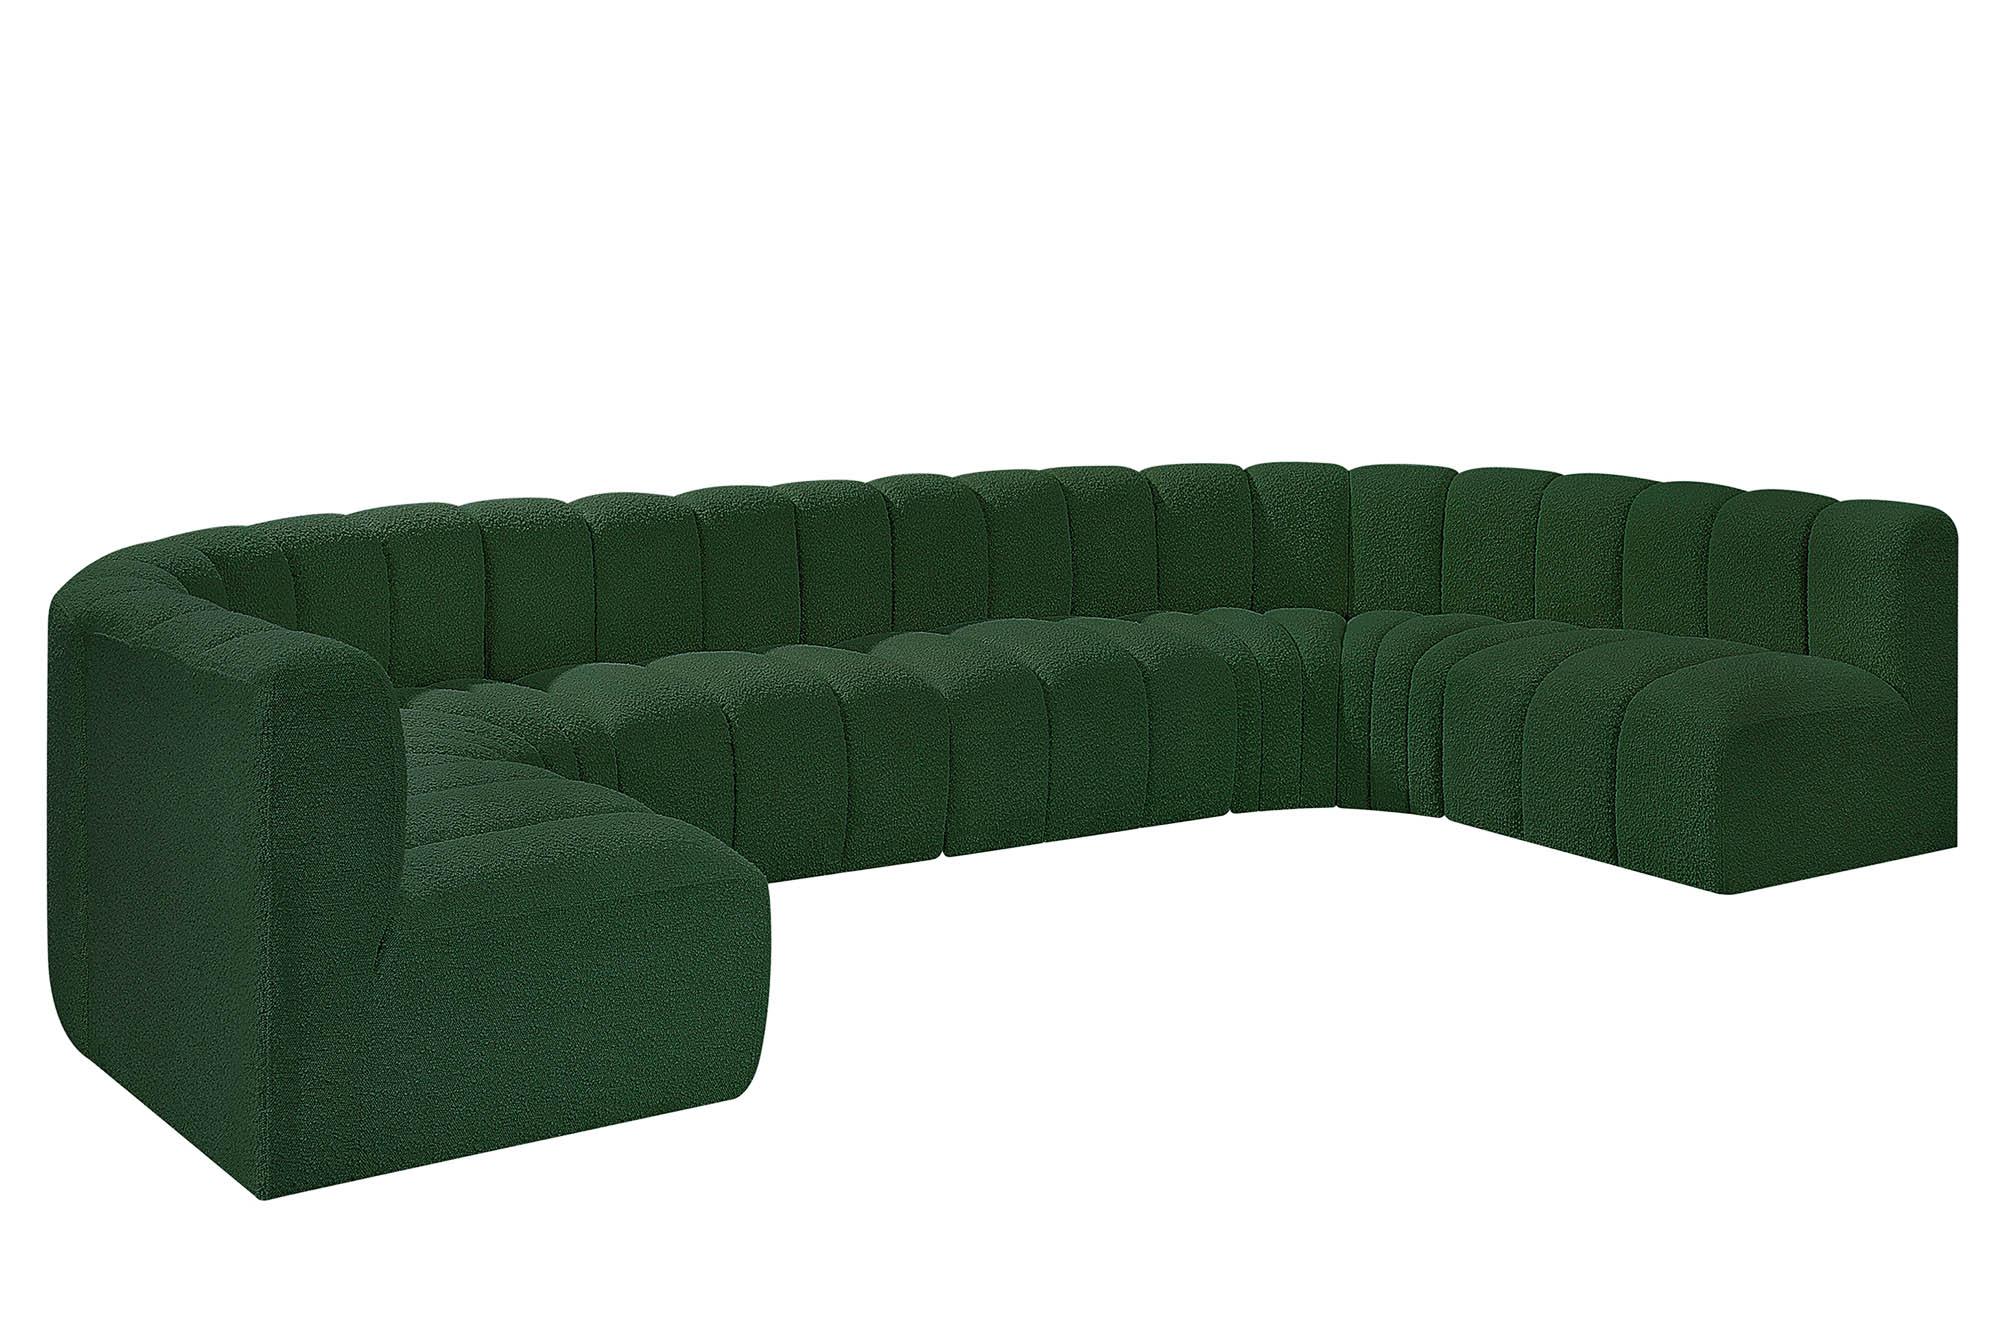 Contemporary, Modern Modular Sectional Sofa ARC 102Green-S8A 102Green-S8A in Green 